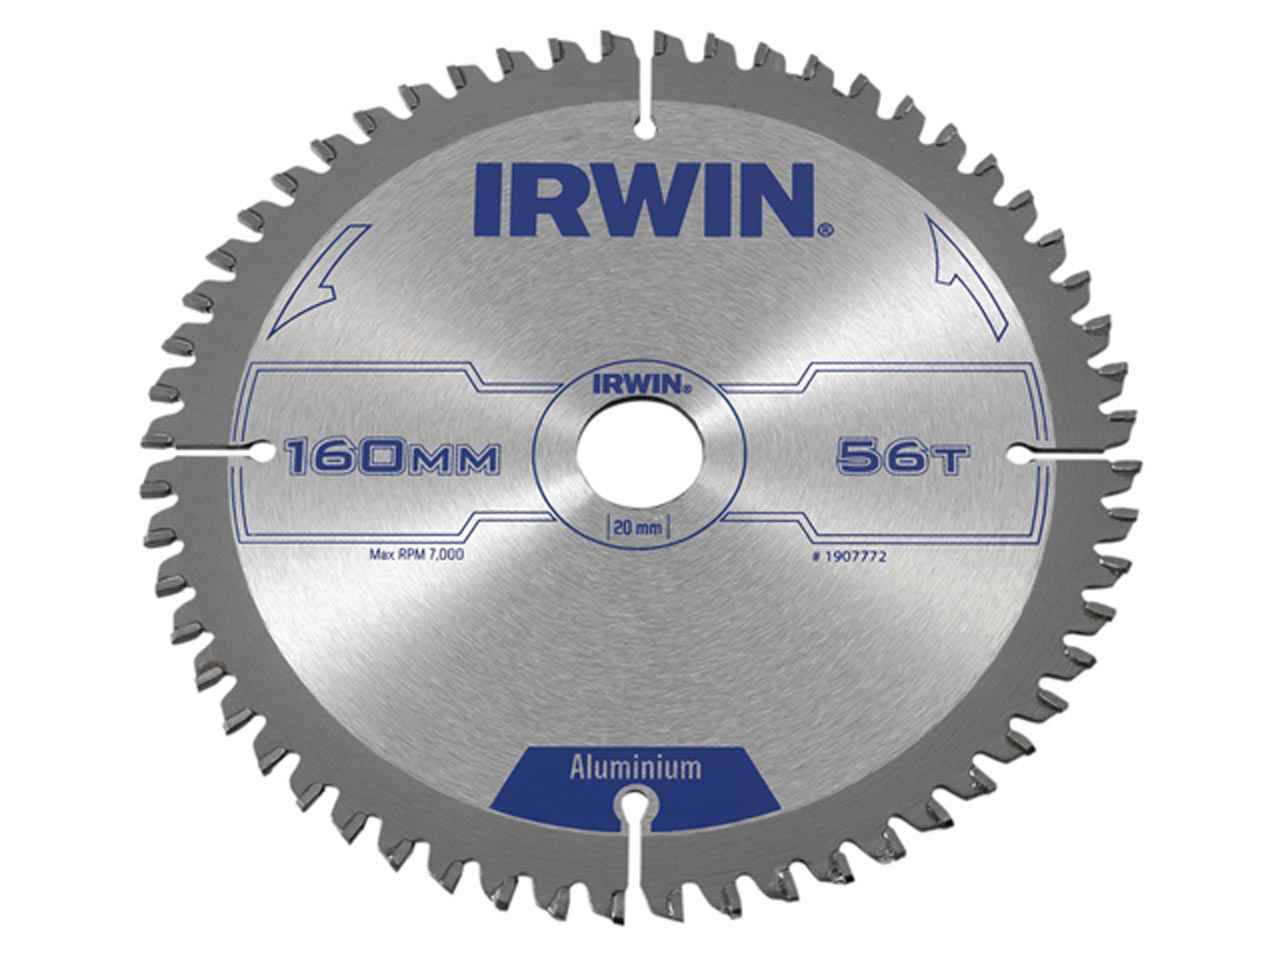 Irwin 1907772 Aluminium Circular Saw Blade 160 x 20mm x 56T